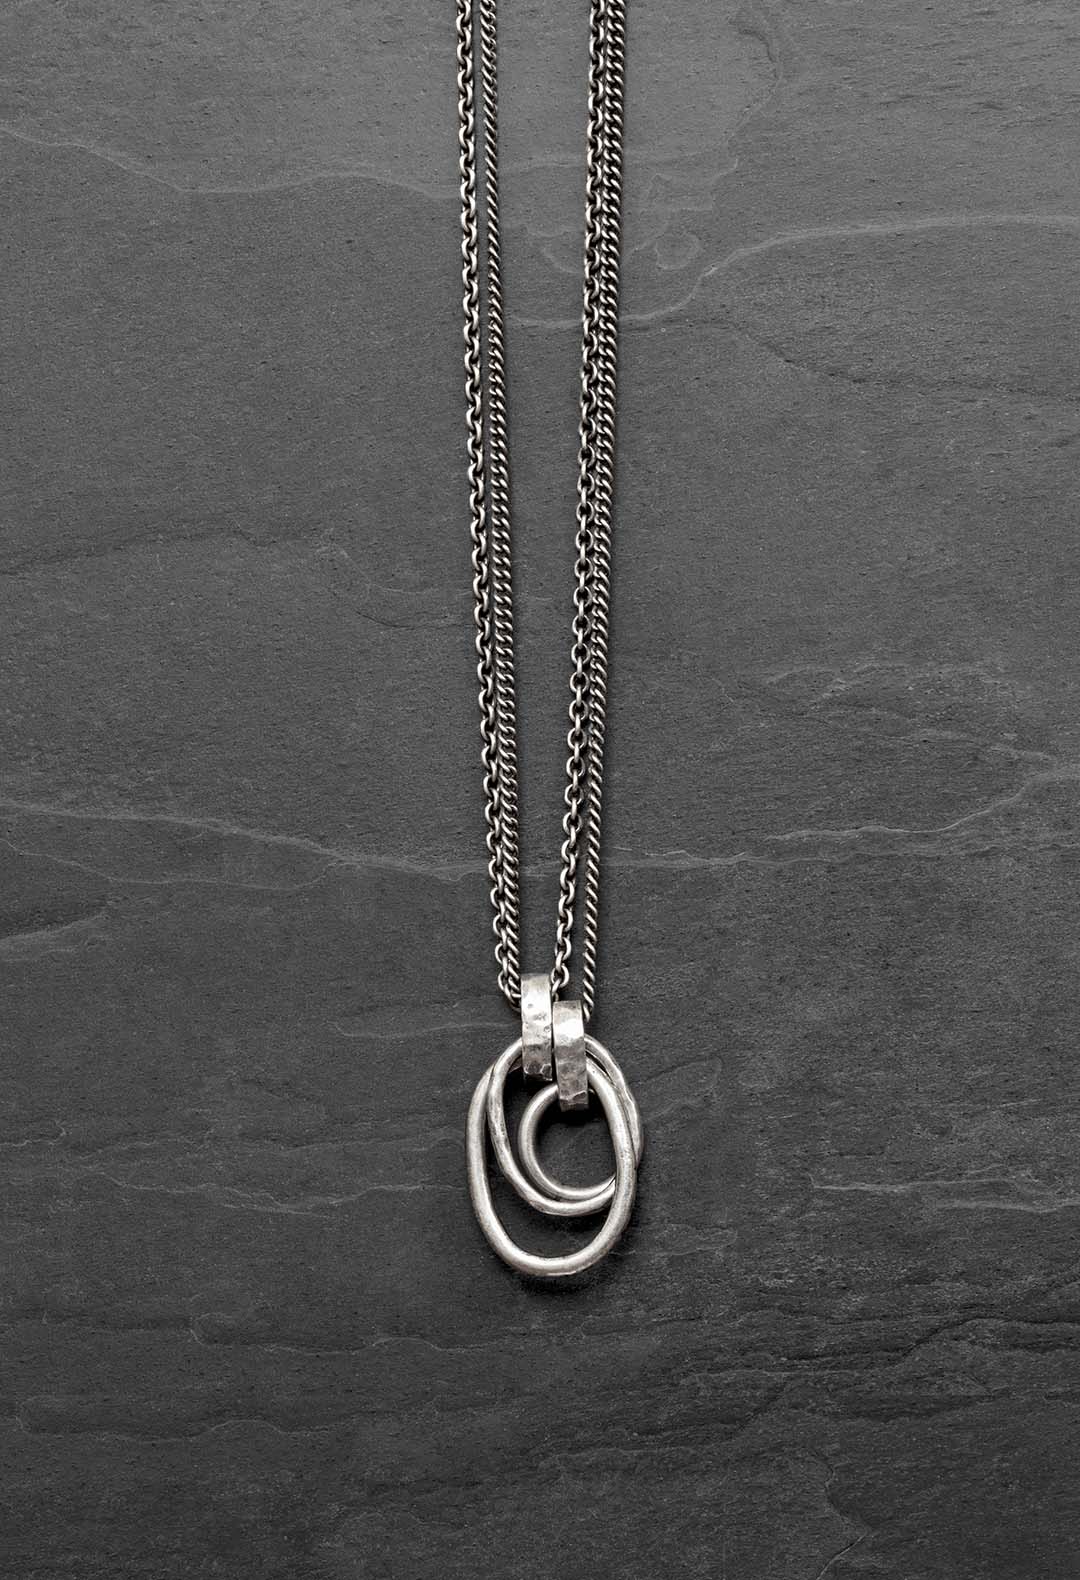 Ring loop necklace